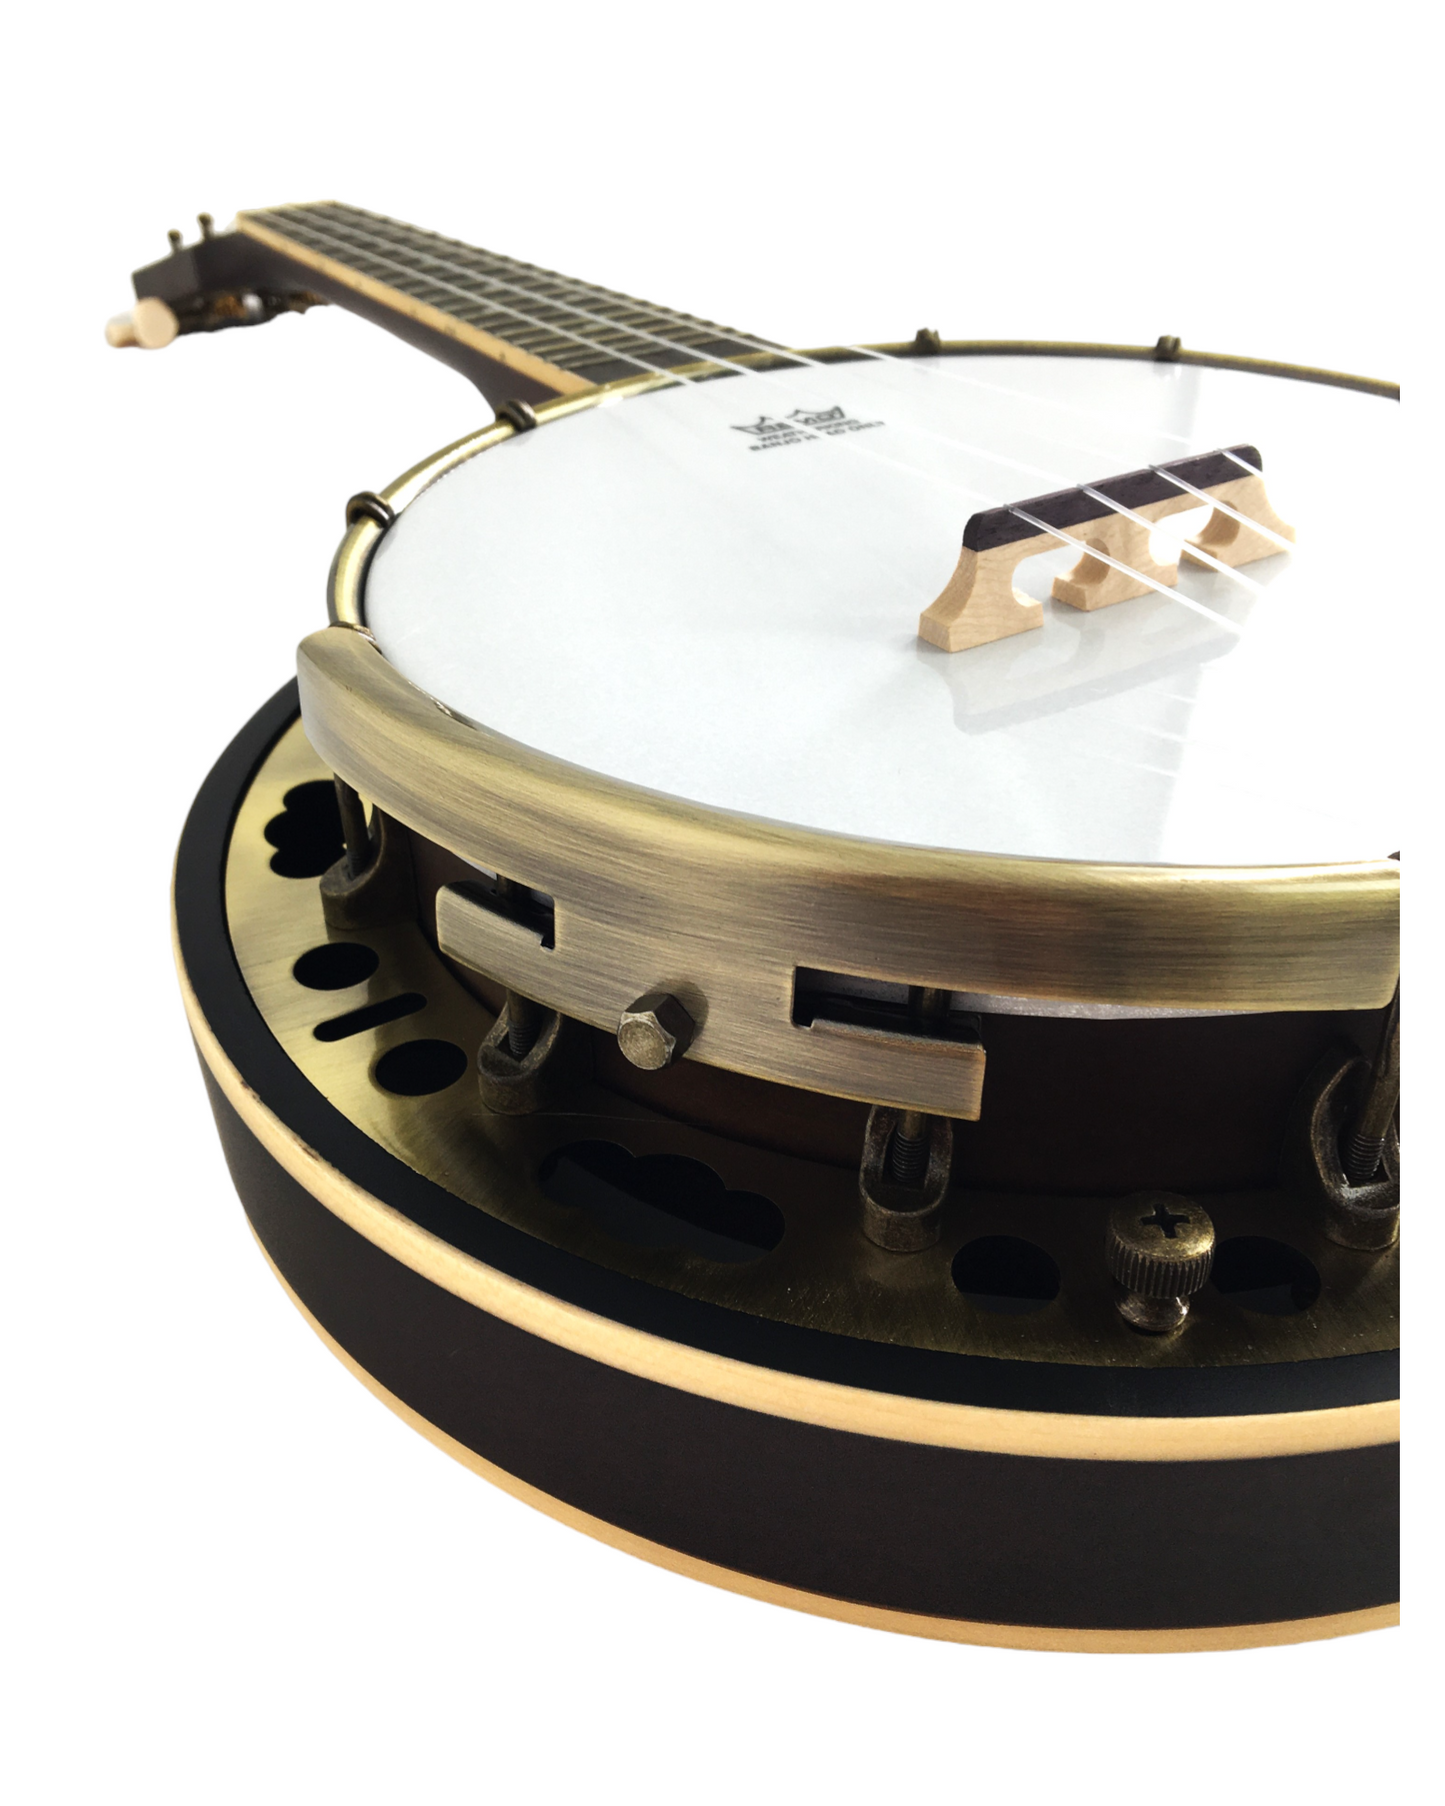 Caraya 4-String Maple Body Resonator Banjolele - Natural CSBJUK118